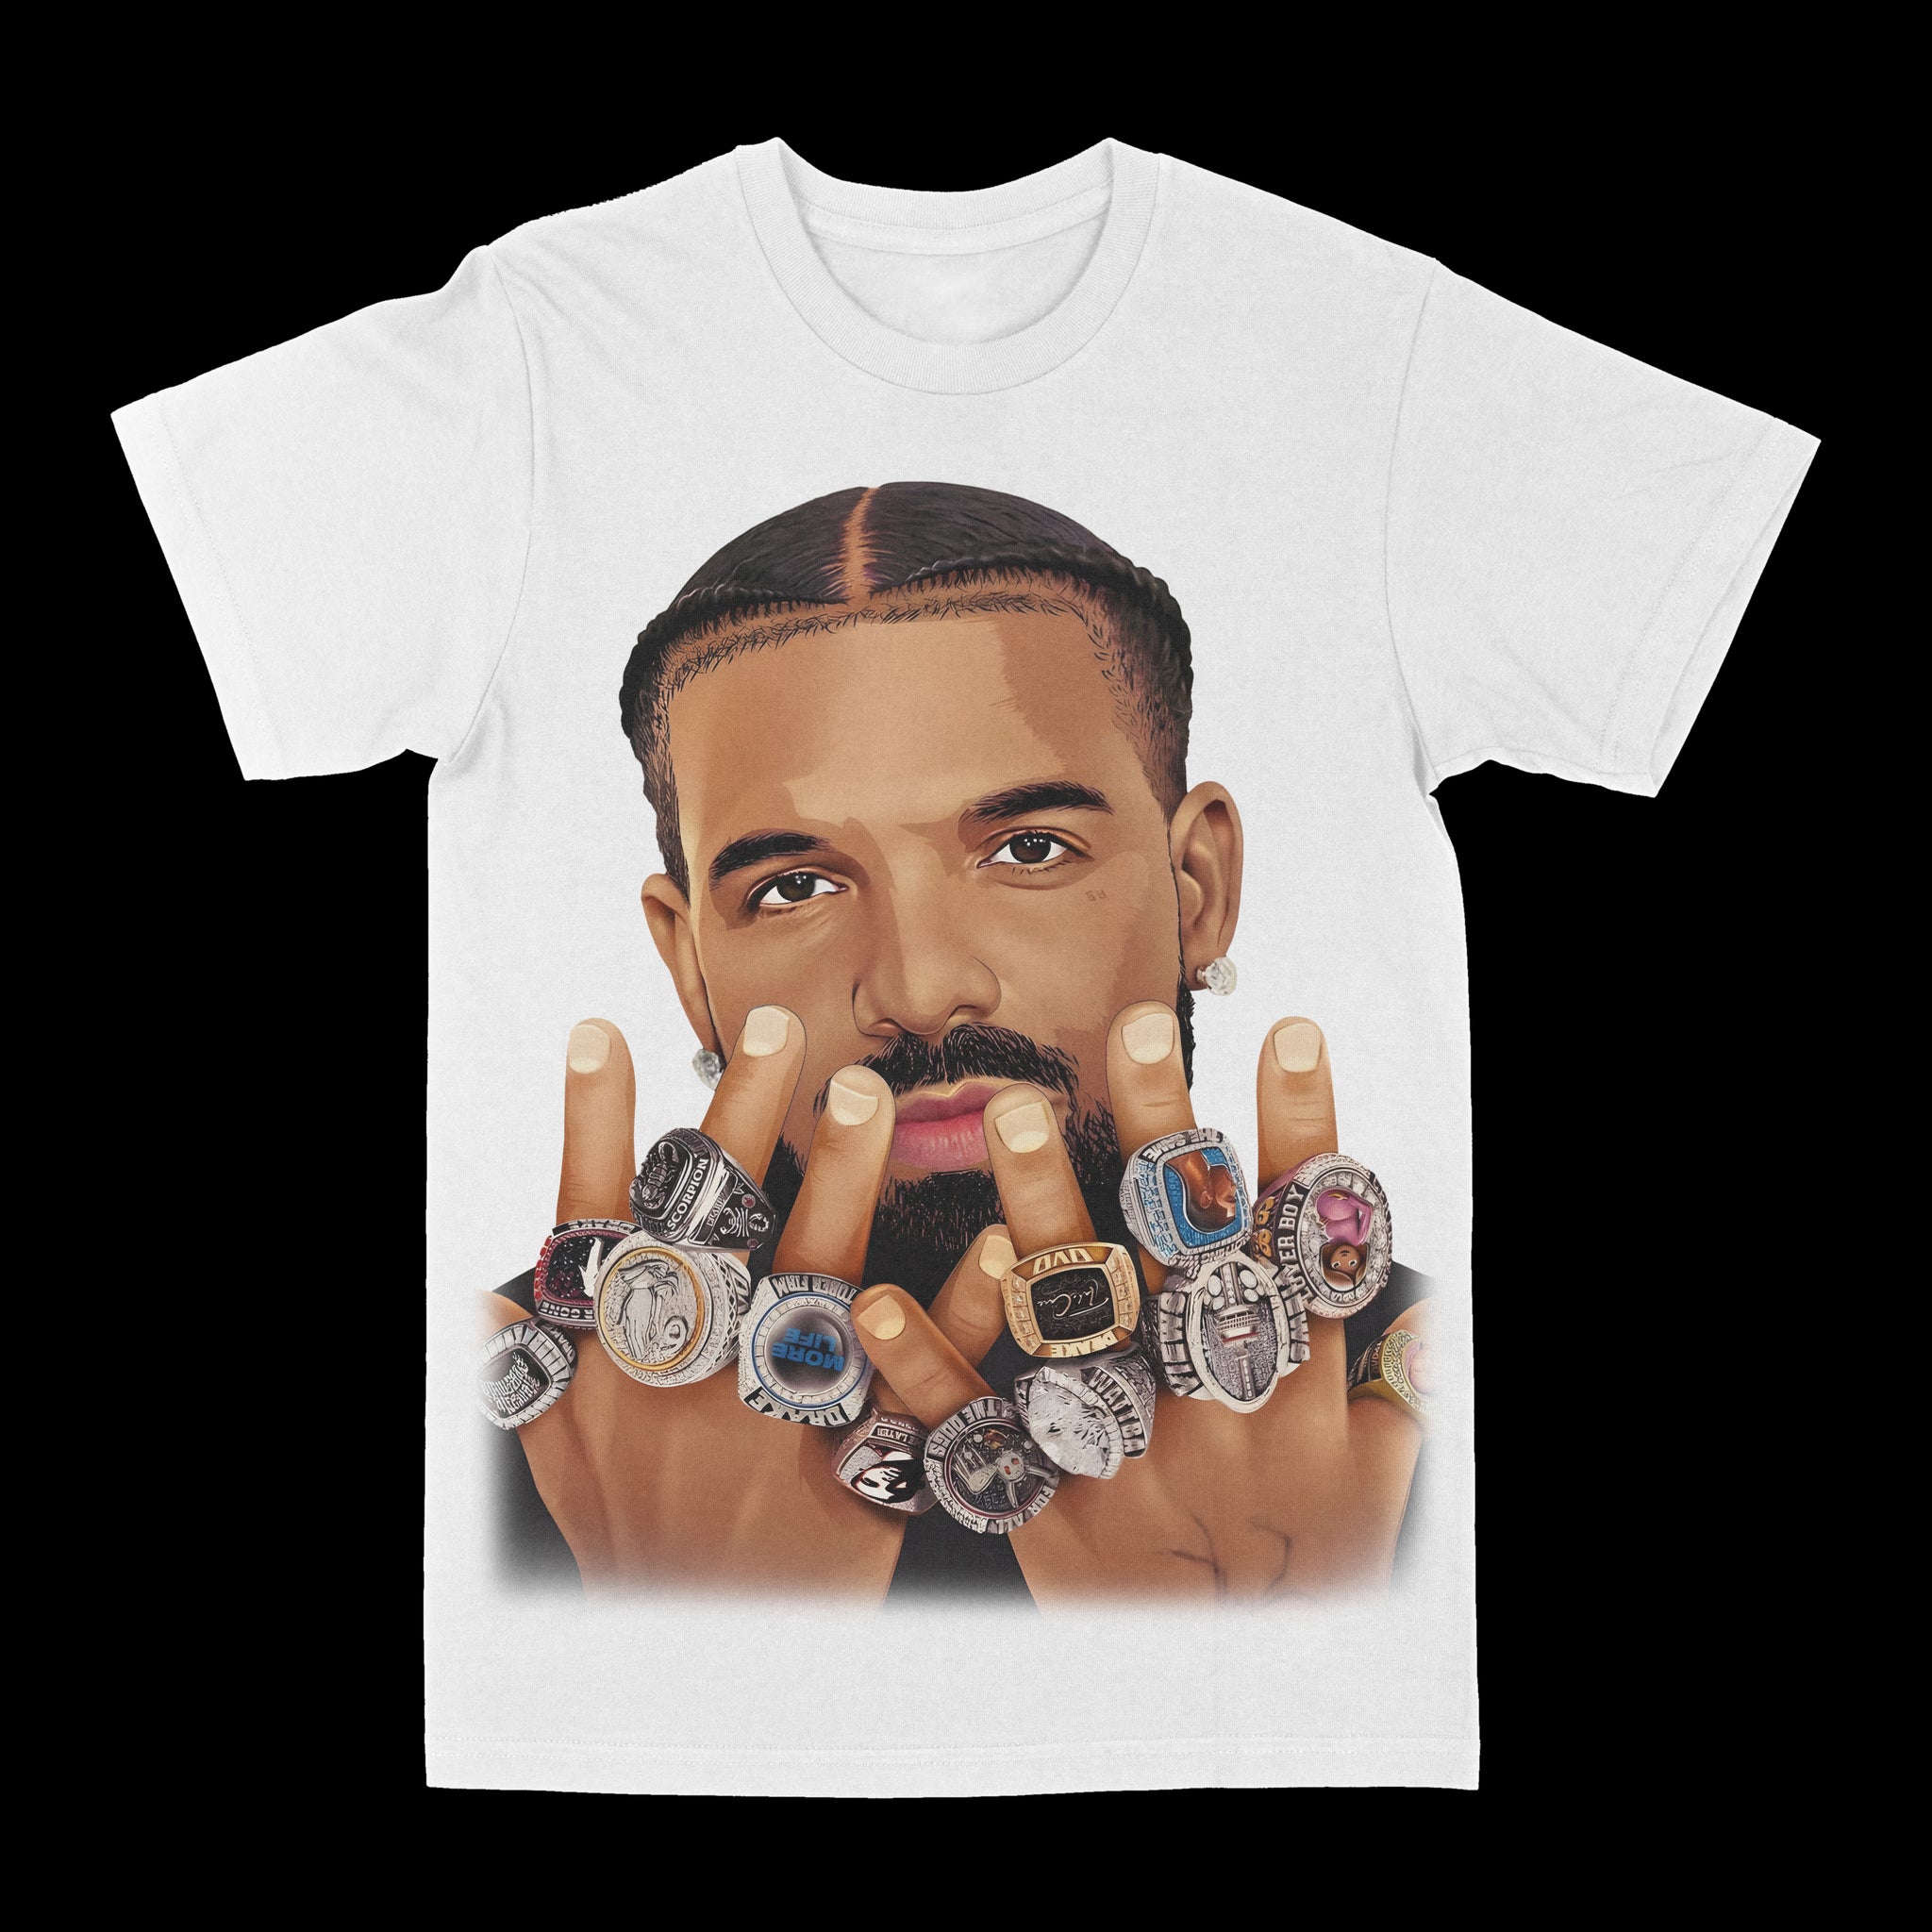 Drake "Doing Big Things" Graphic Tee